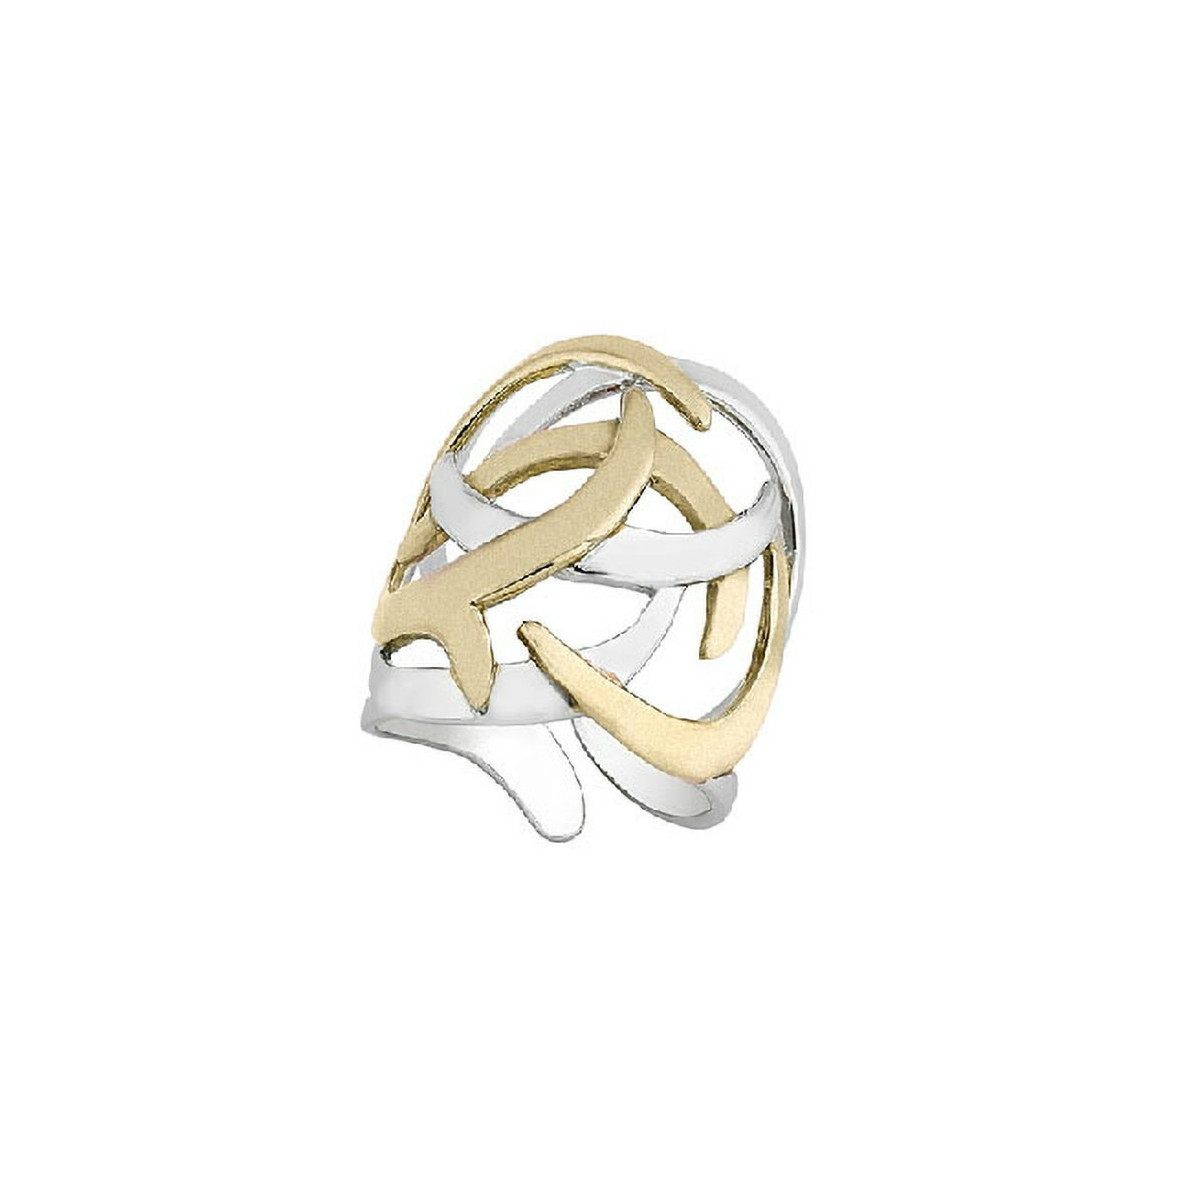 SHIELD Ring in Silver. 18k Gold Vermeil